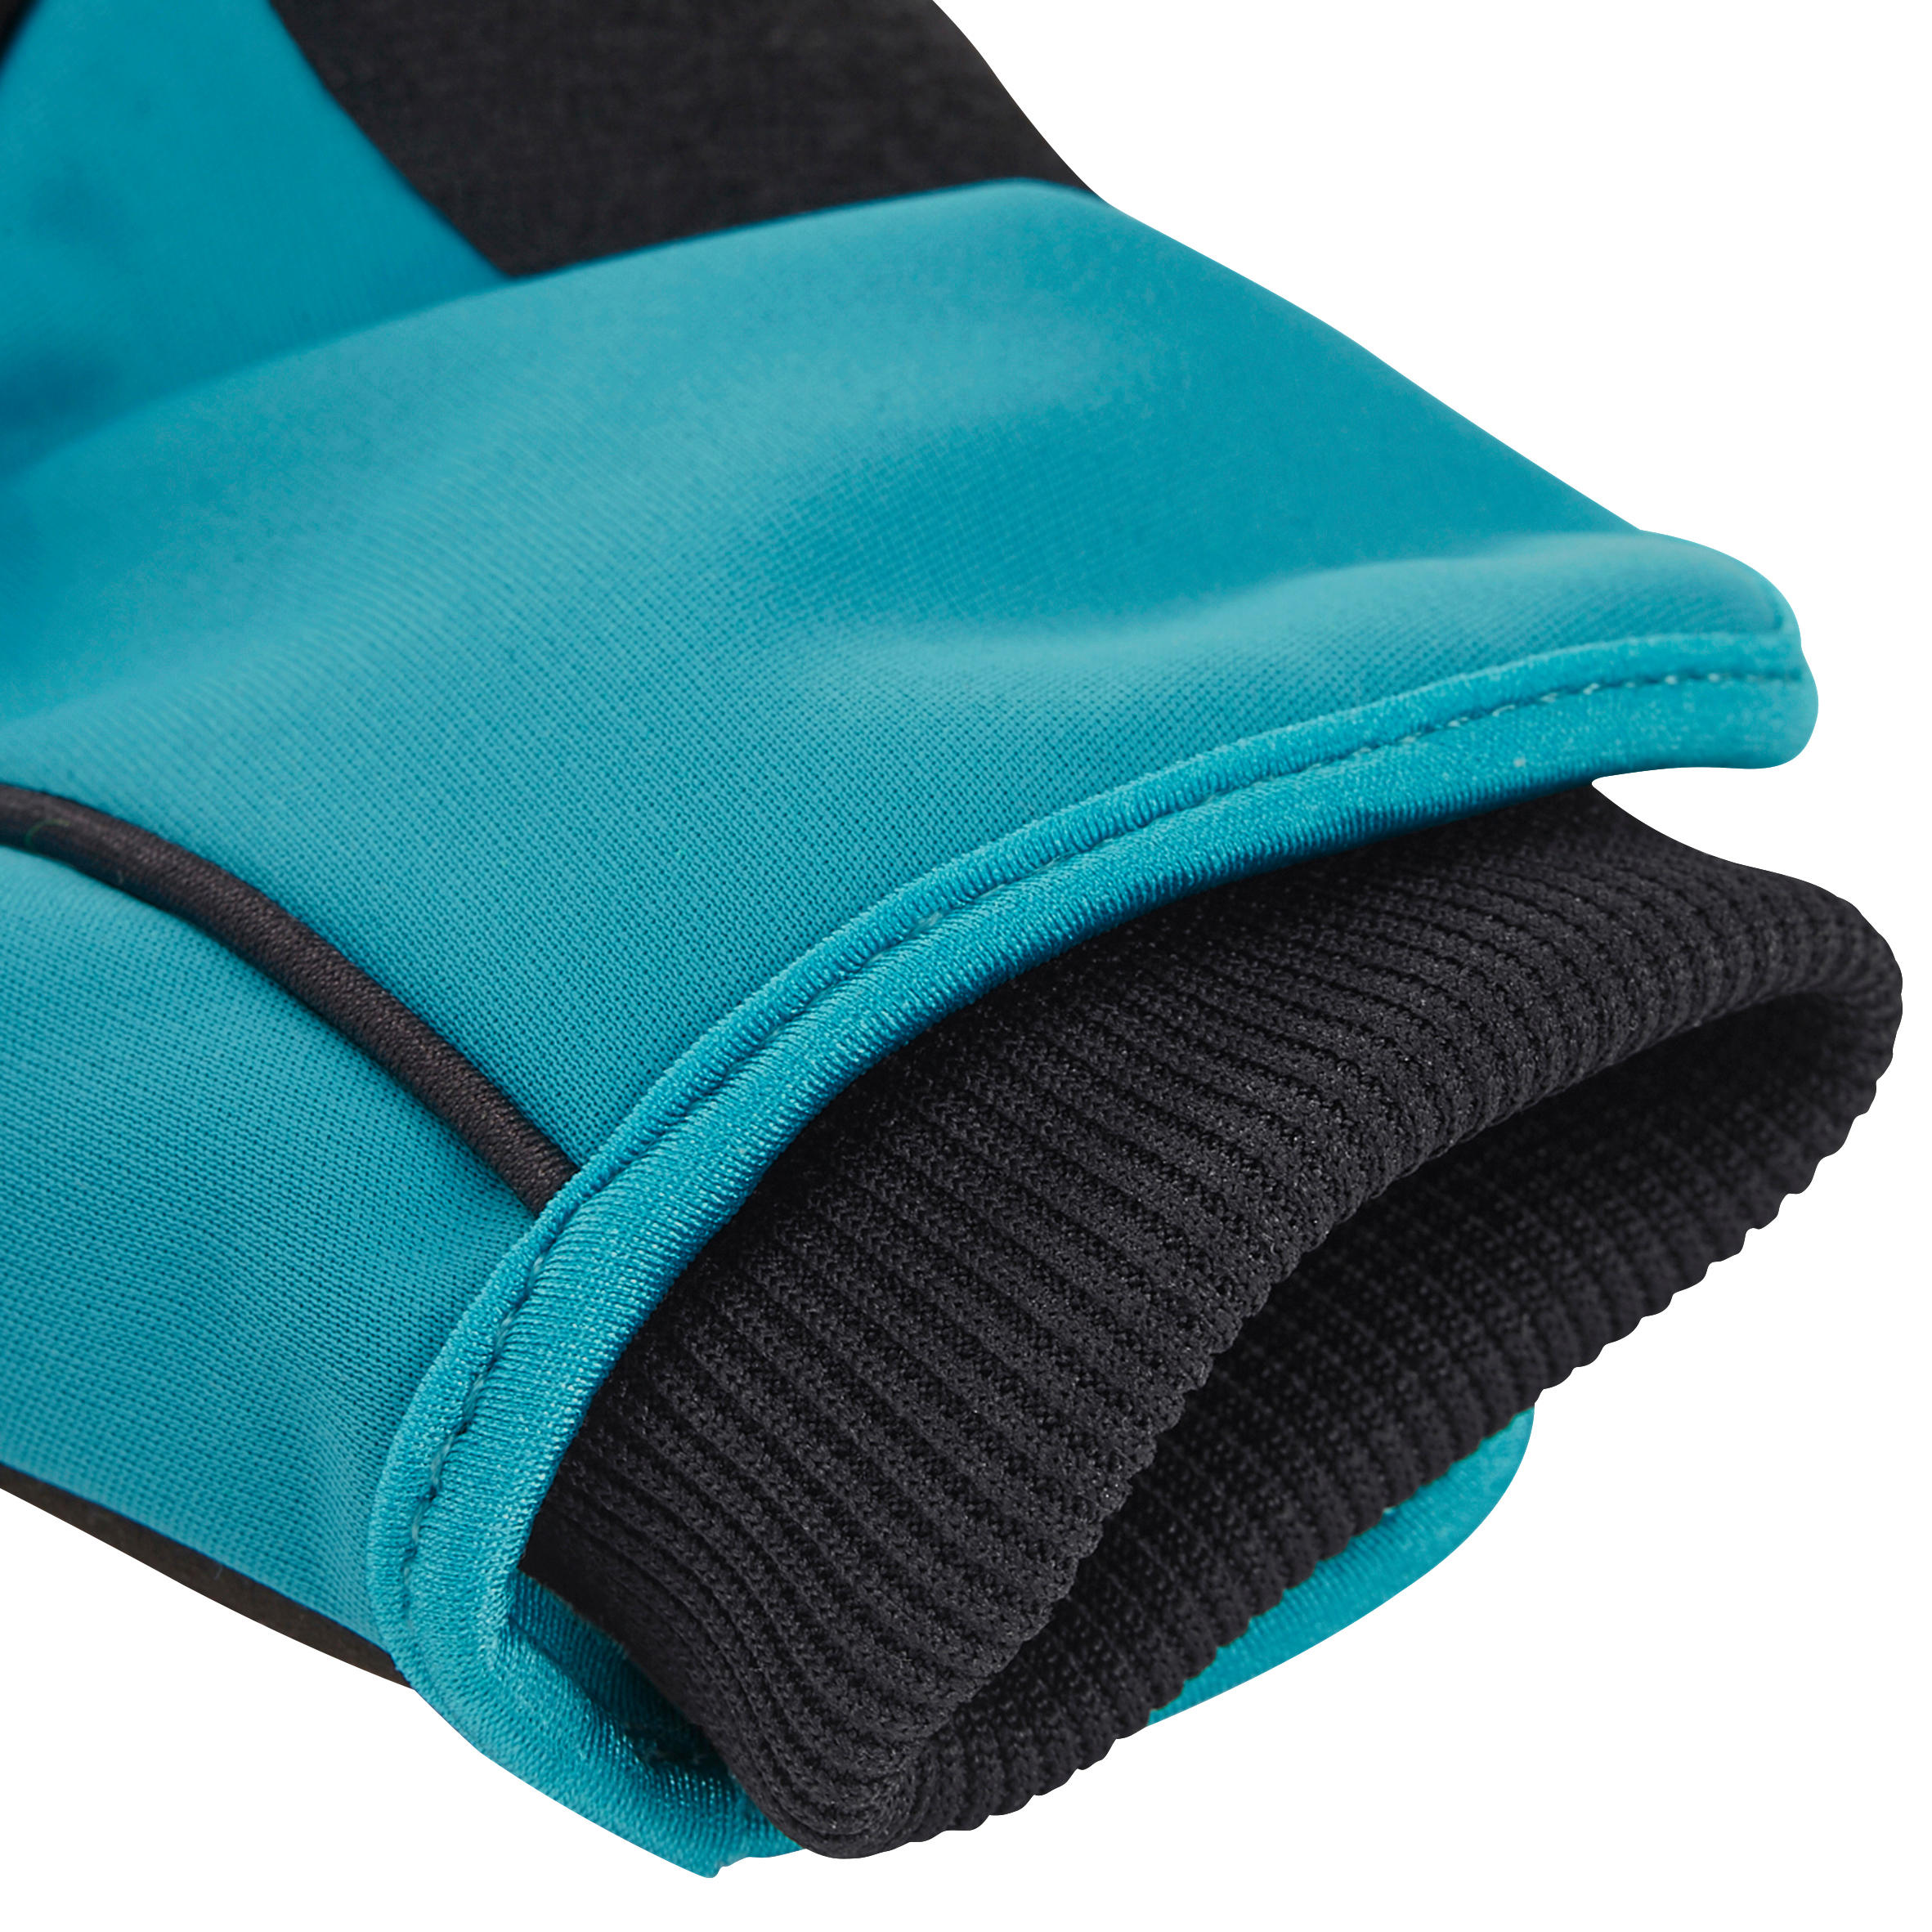 500 Women's Cycling Winter Gloves - Blue 6/11